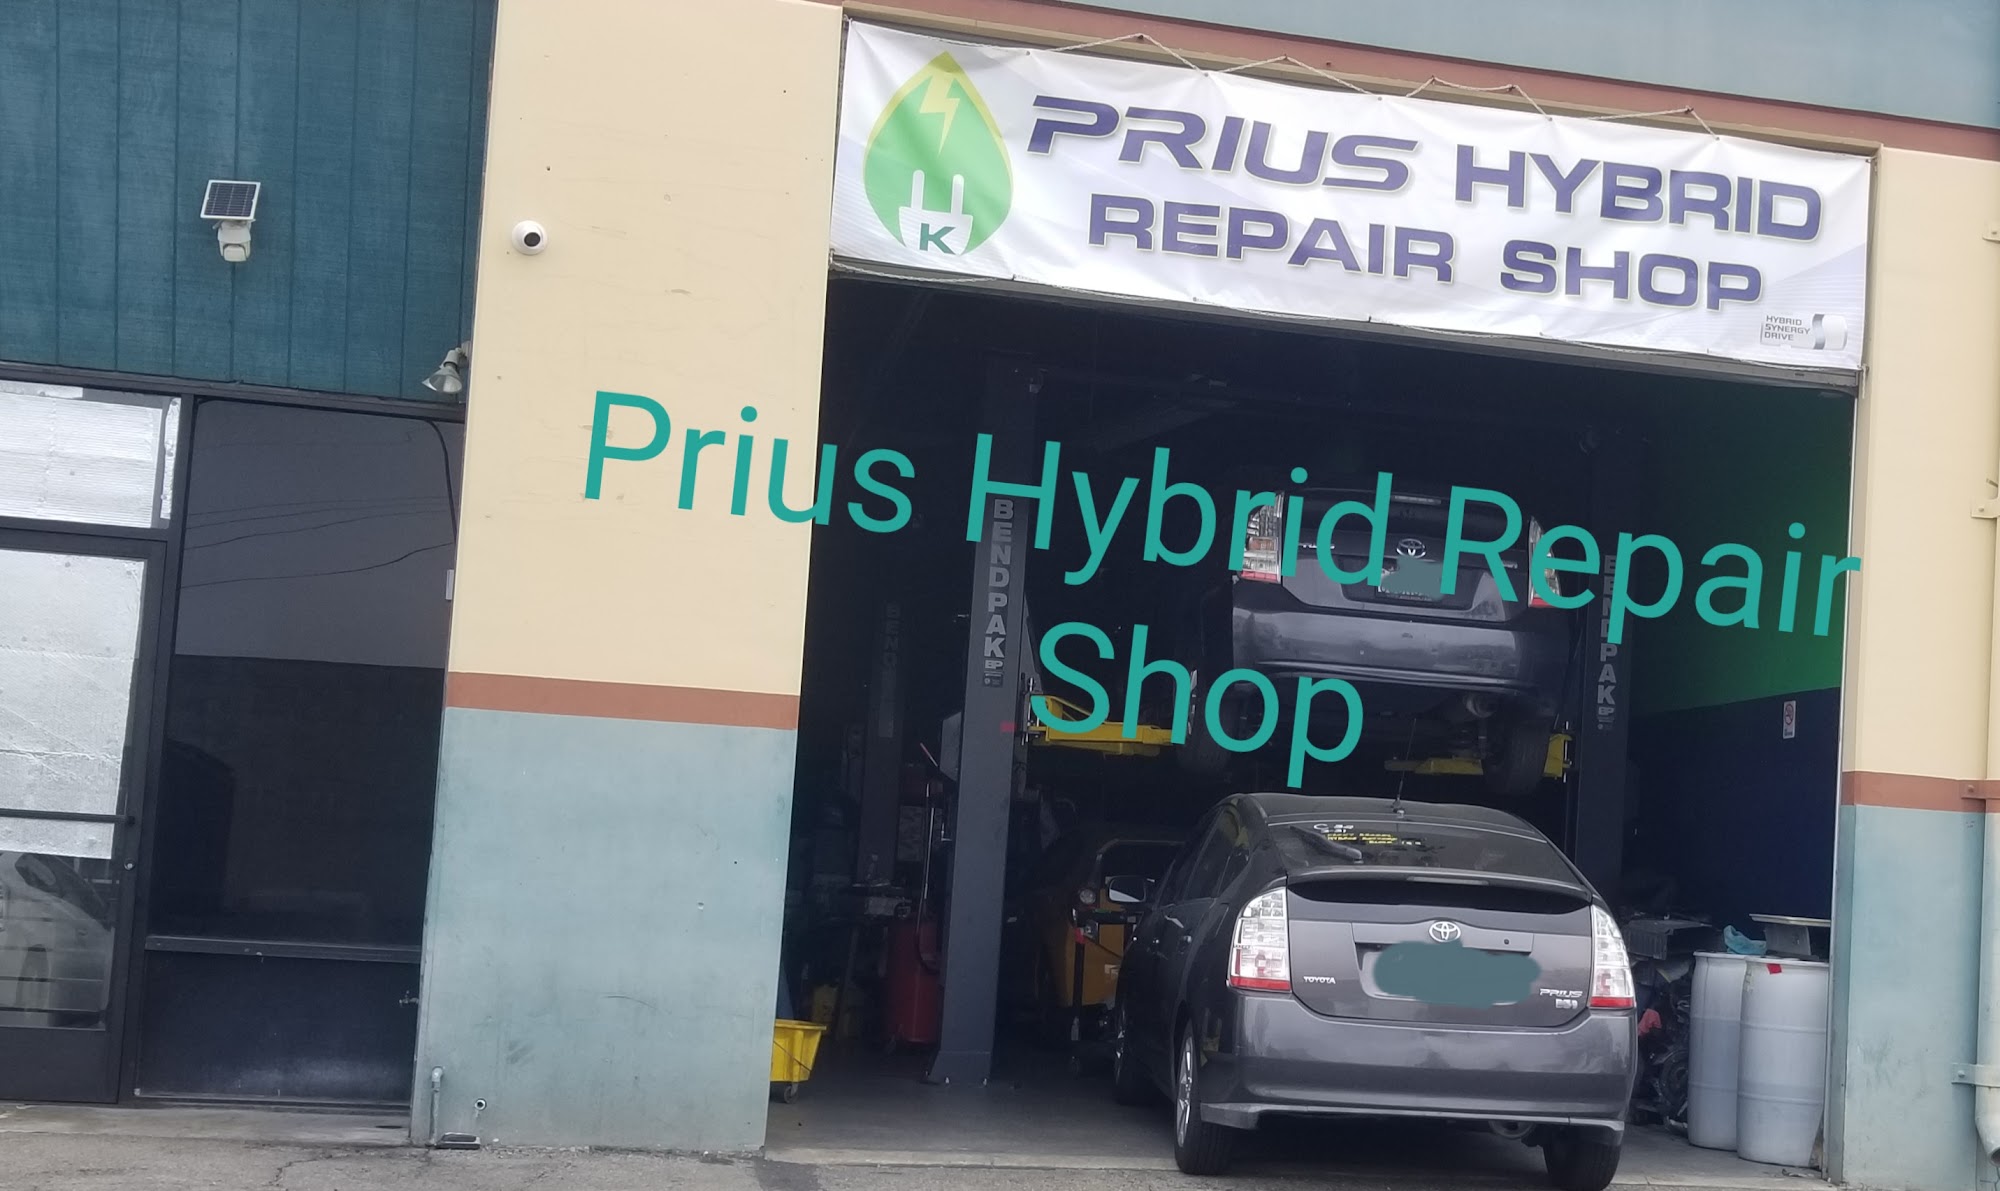 Prius Hybrid Repair Shop